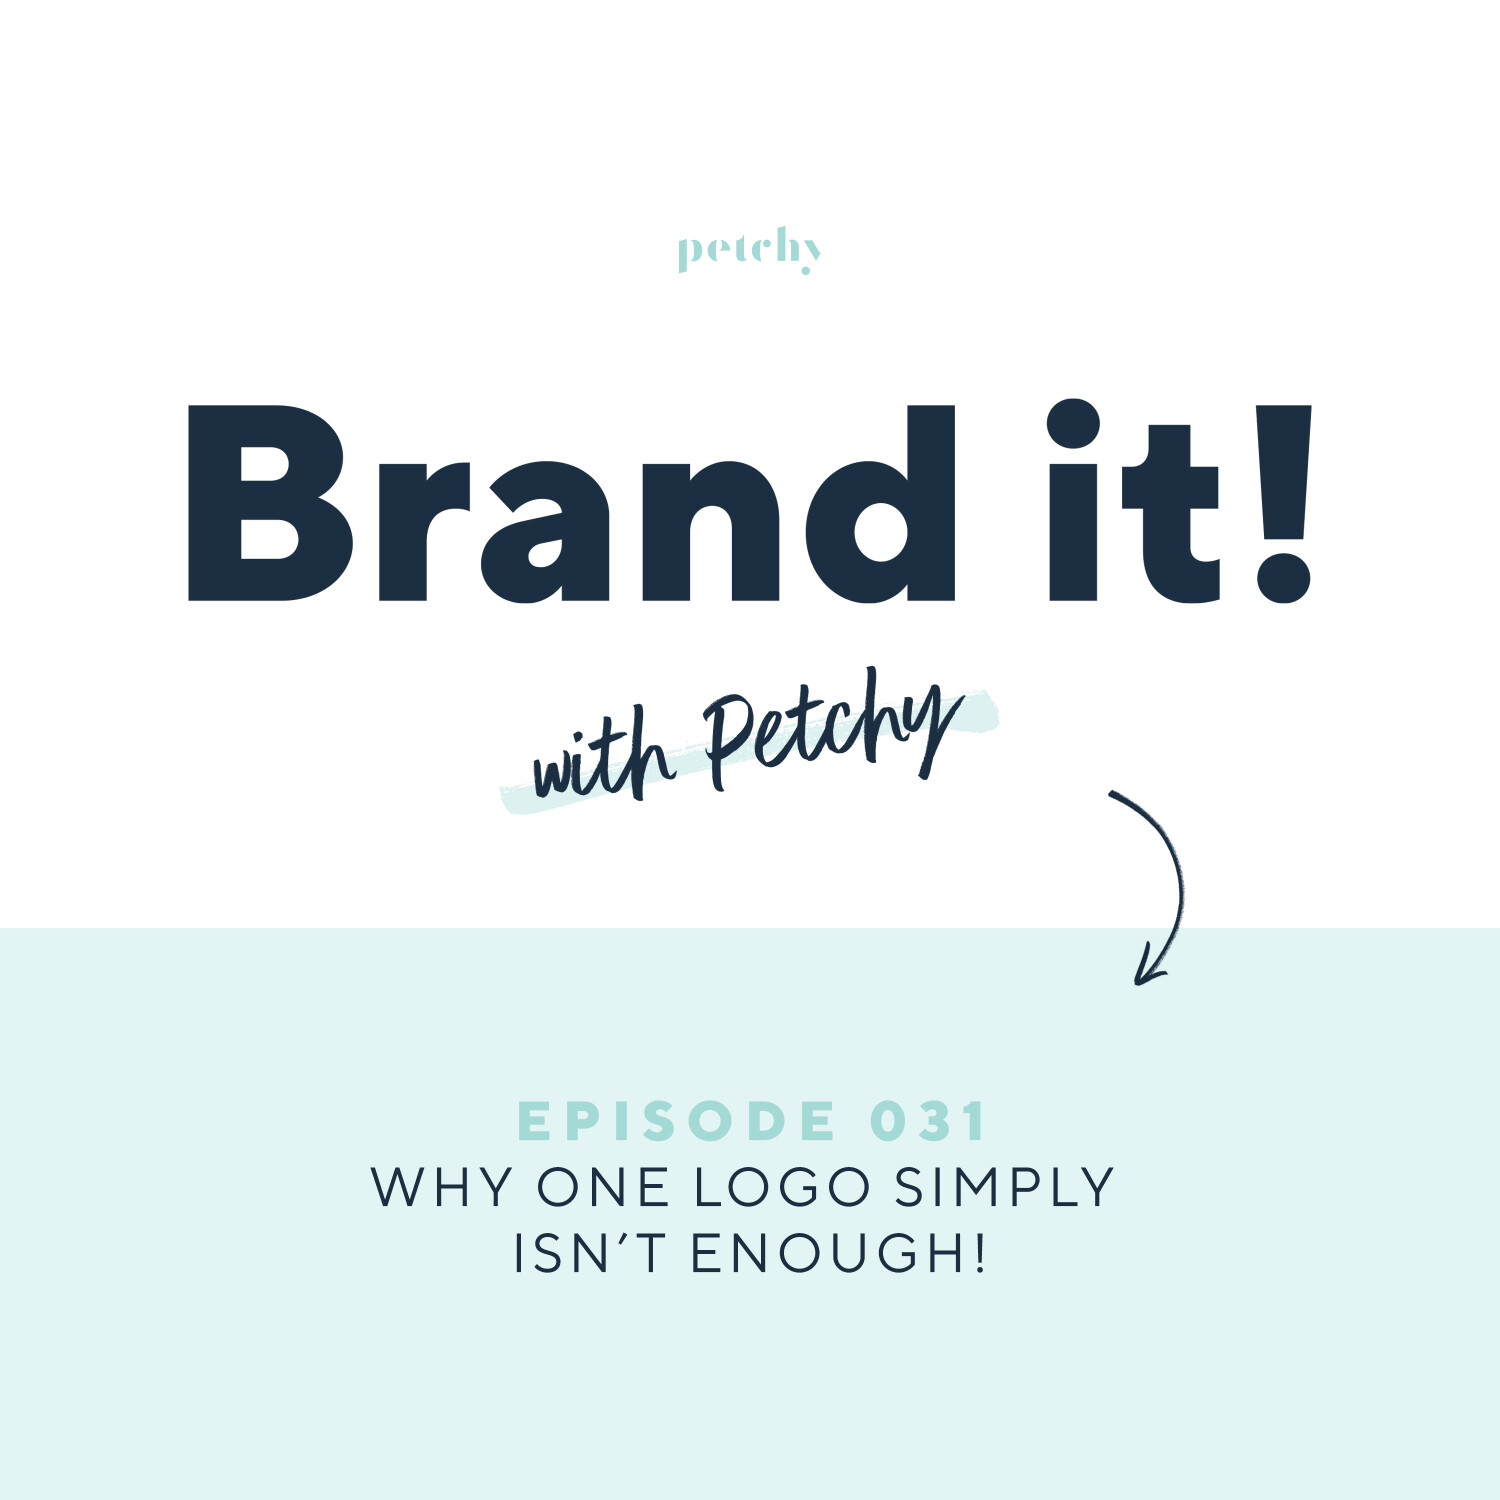 Why one logo simply isn't enough!